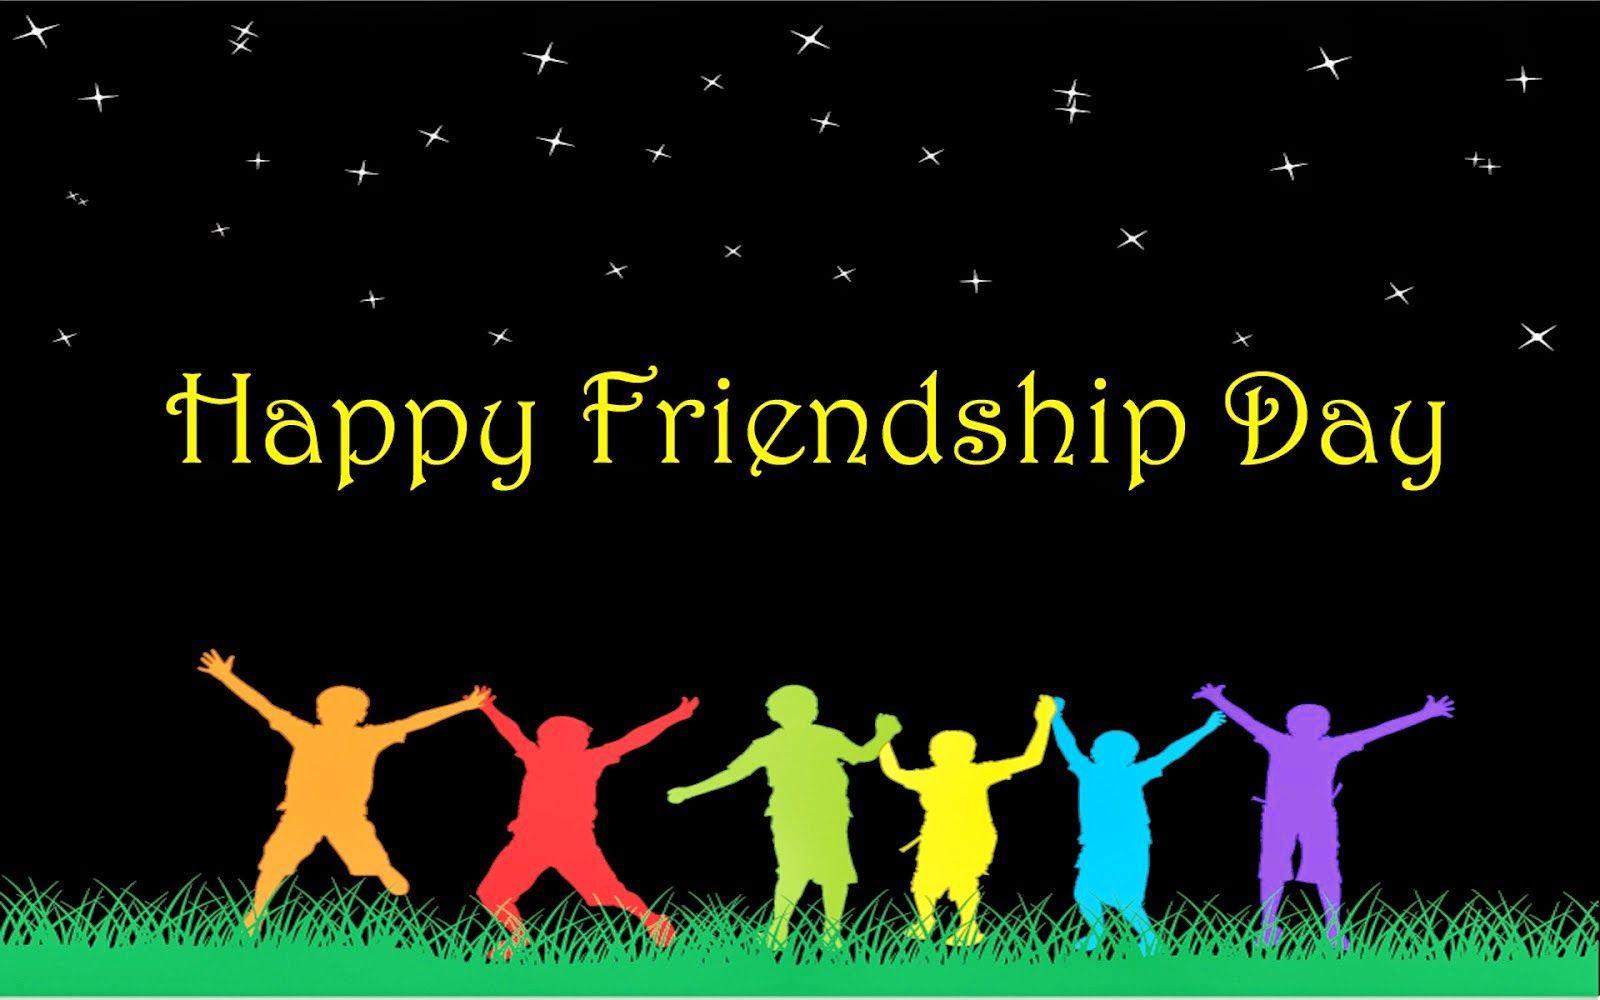 Happy Friendship Day Image, HD Wallpaper, Photo & Pics for Whatsapp DP 2019